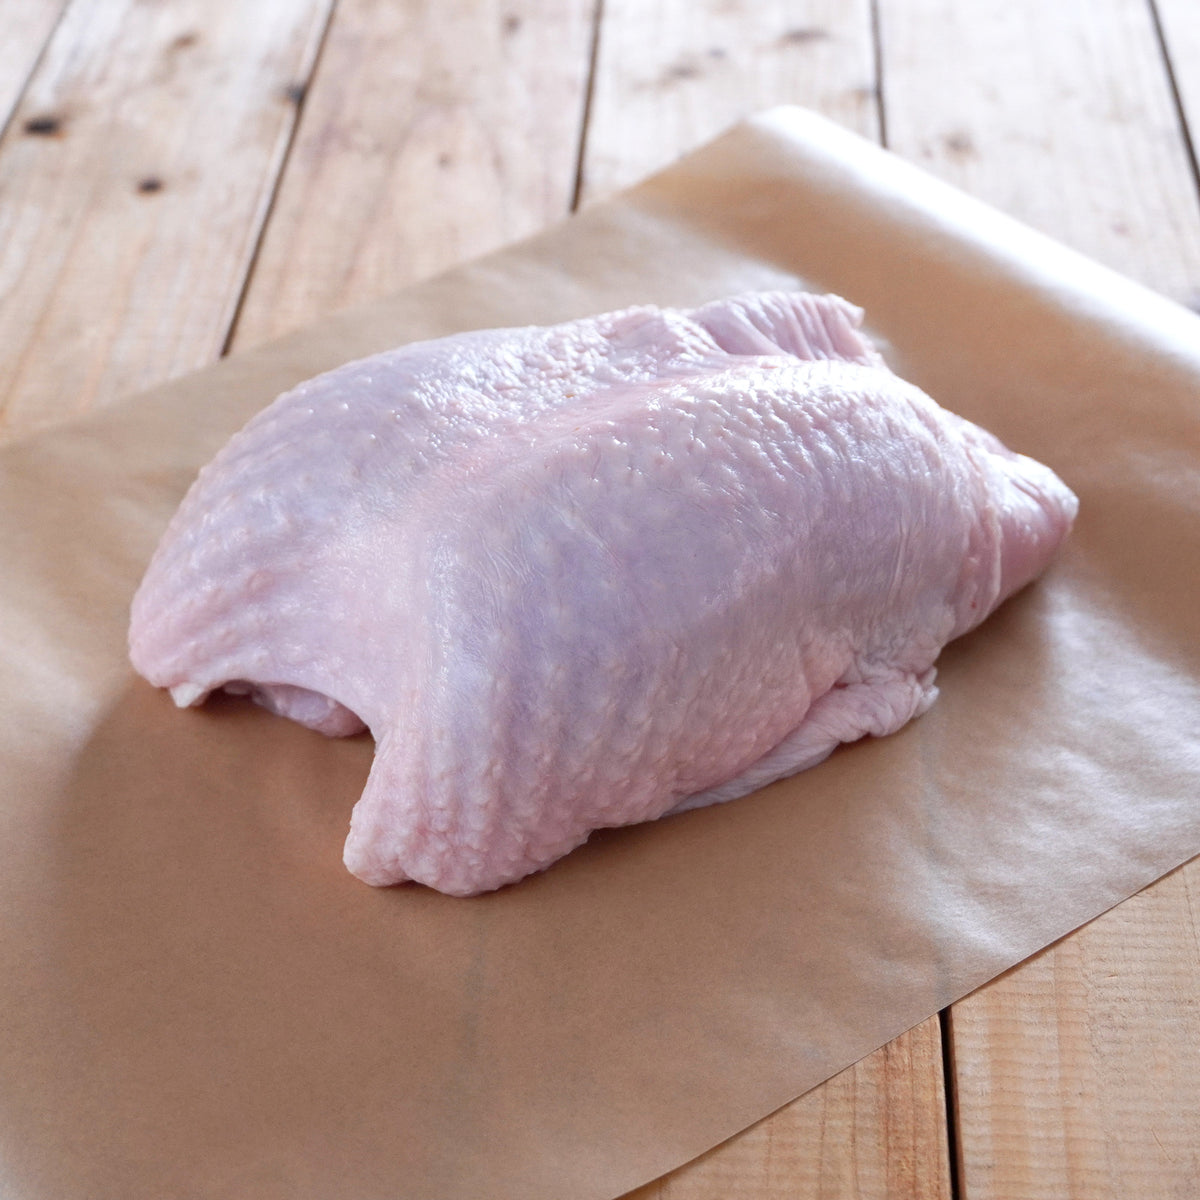 Free-Range Skin-On Whole Turkey Breast from New Zealand (1.2kg) - Horizon Farms